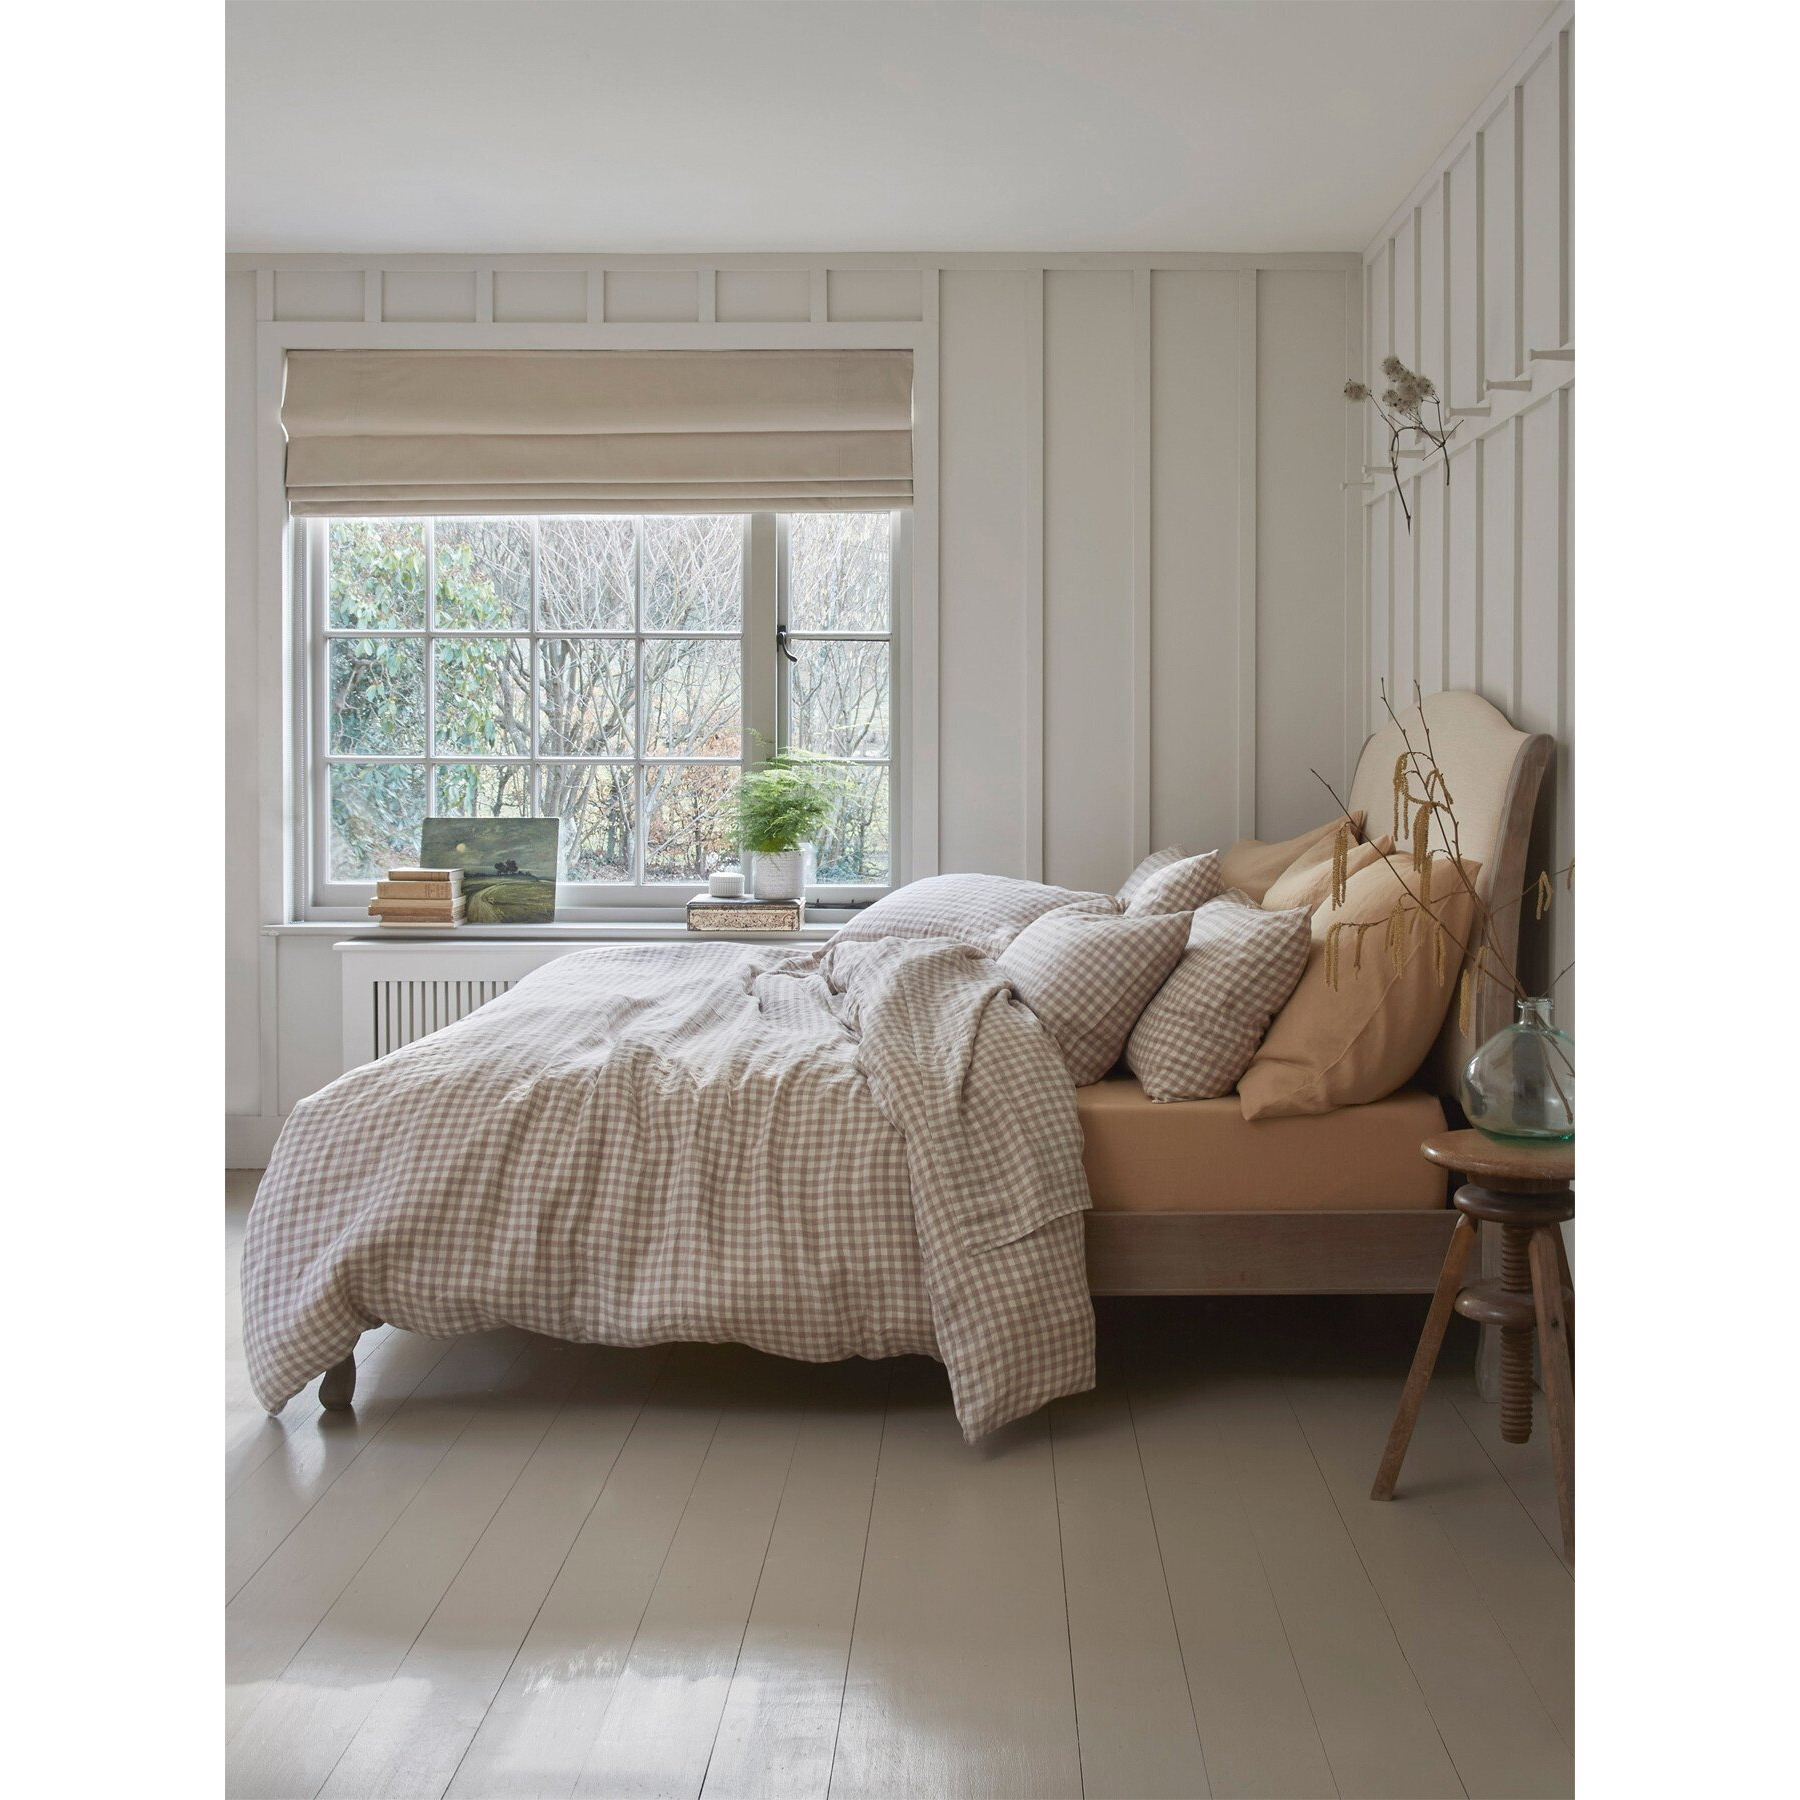 Piglet in Bed Gingham Linen Flat Sheet - Size Super King Neutral - image 1